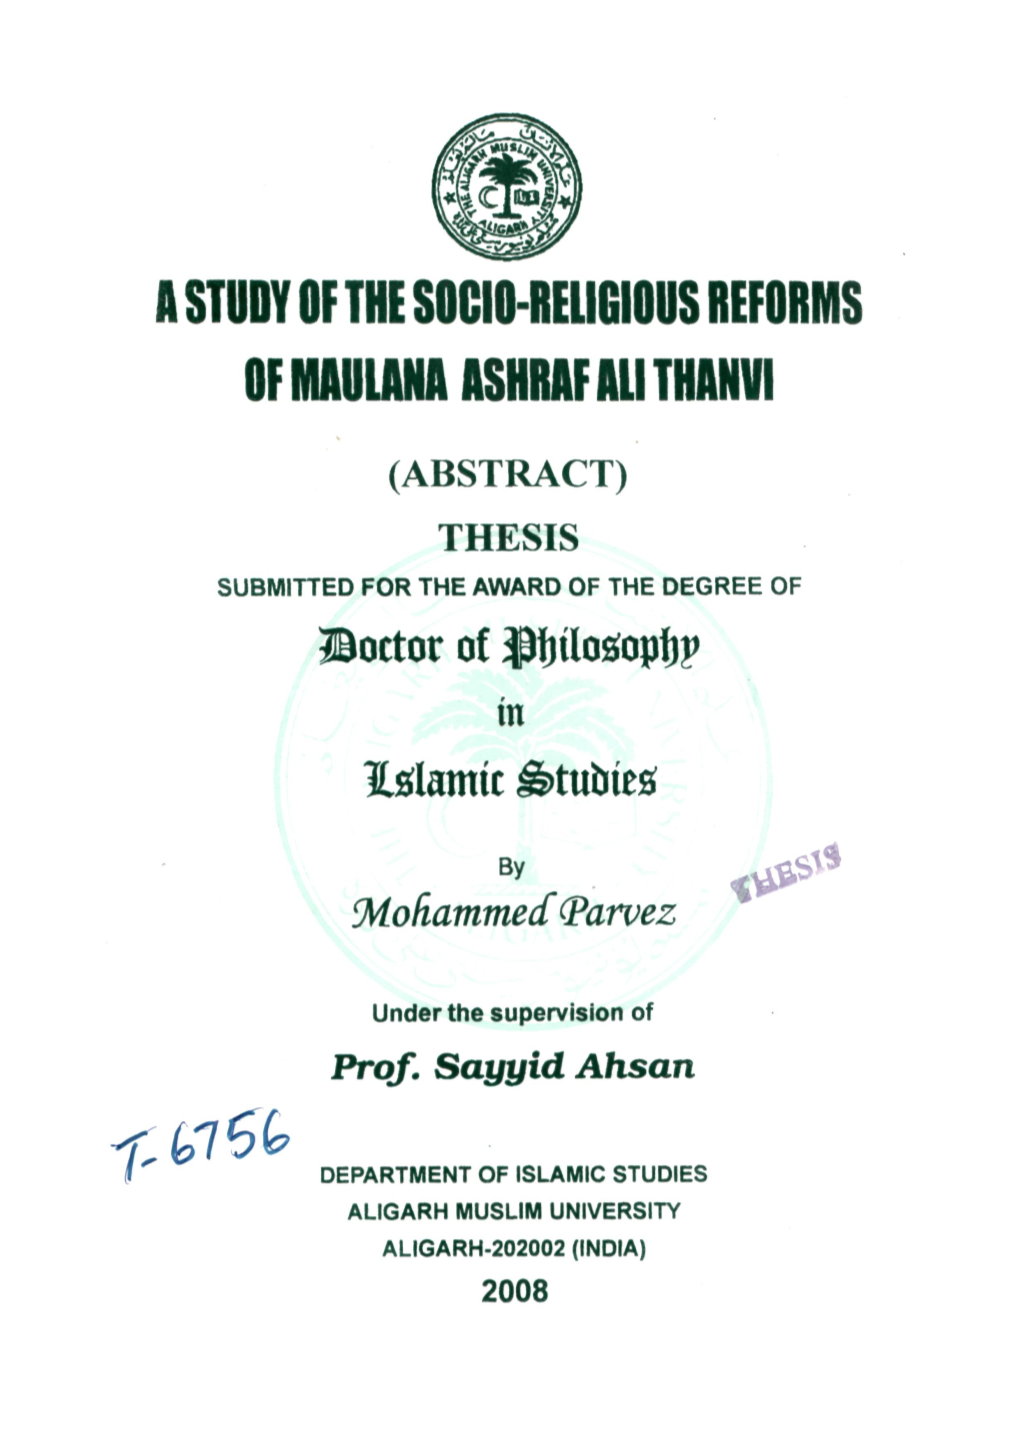 A Study of the Sogio-Reugious Reforms Ofmaulanaashrafalithanvi